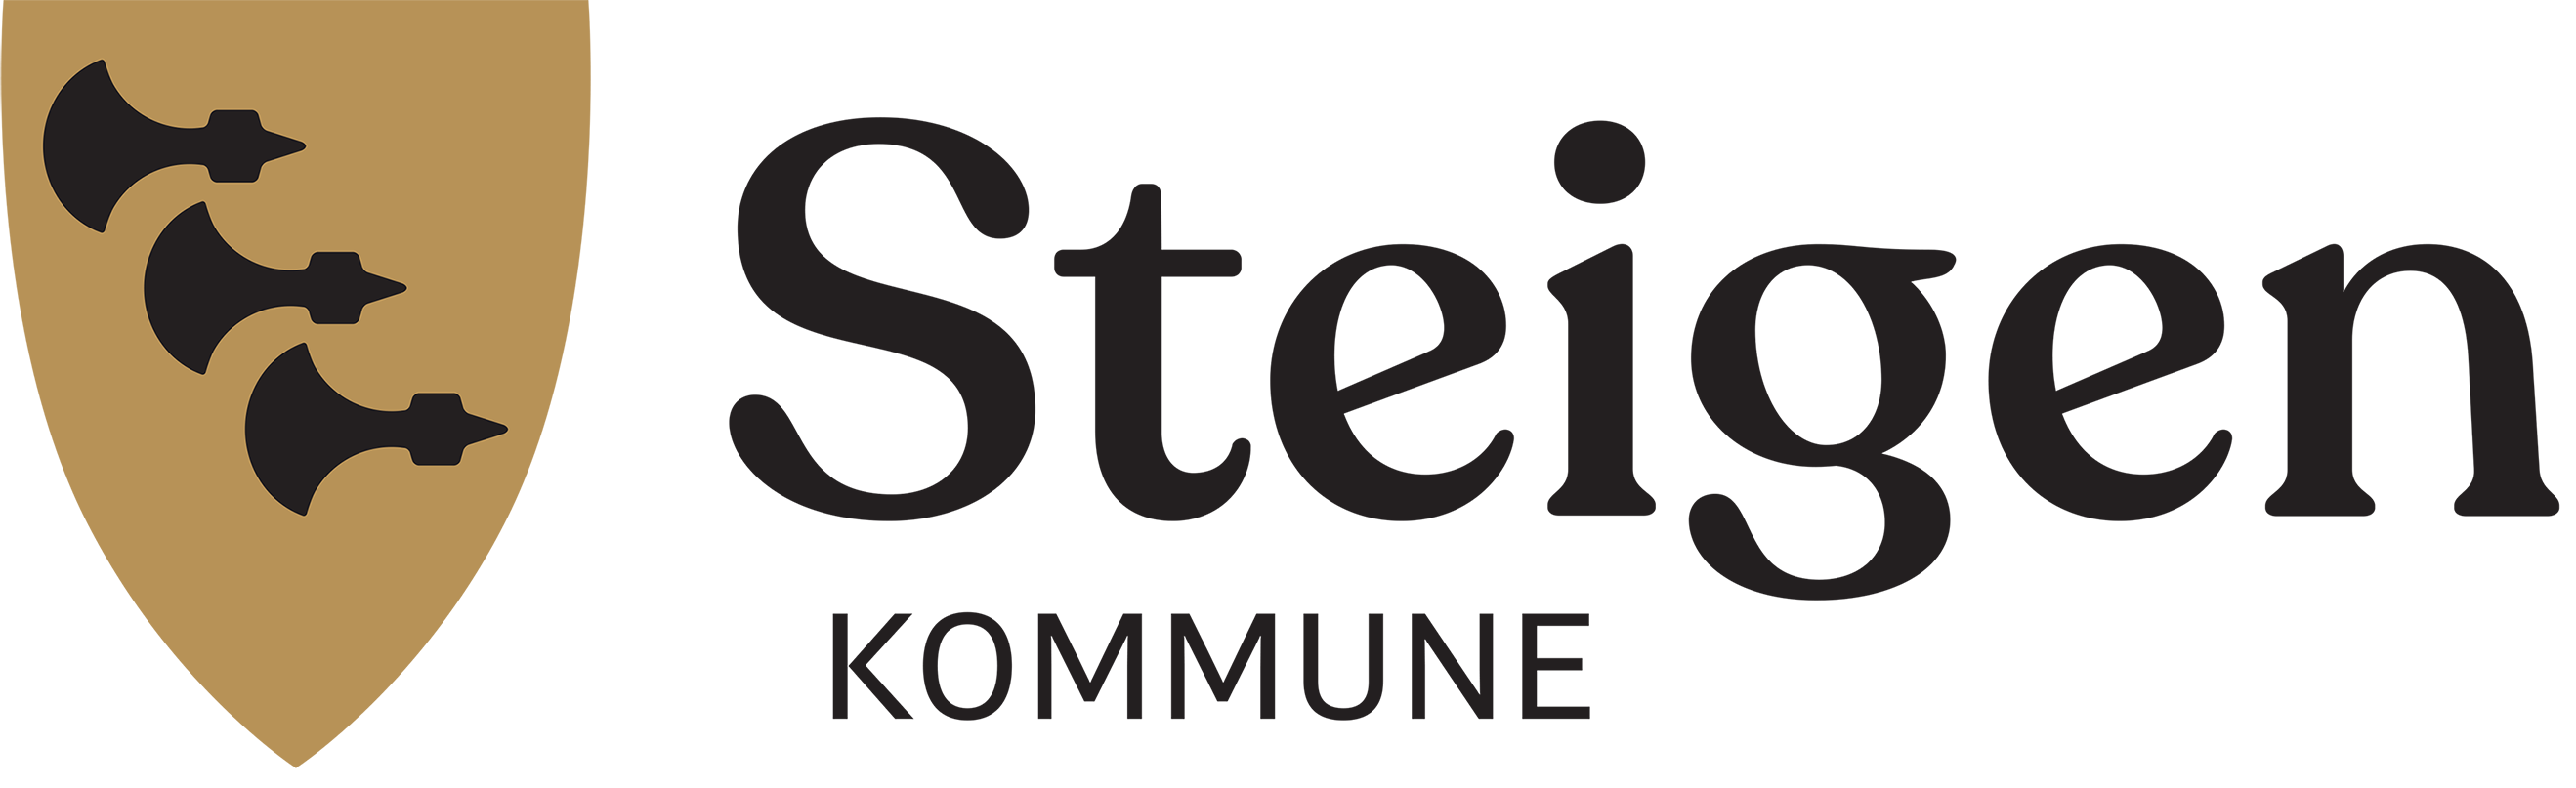 Steigen Kommune logo